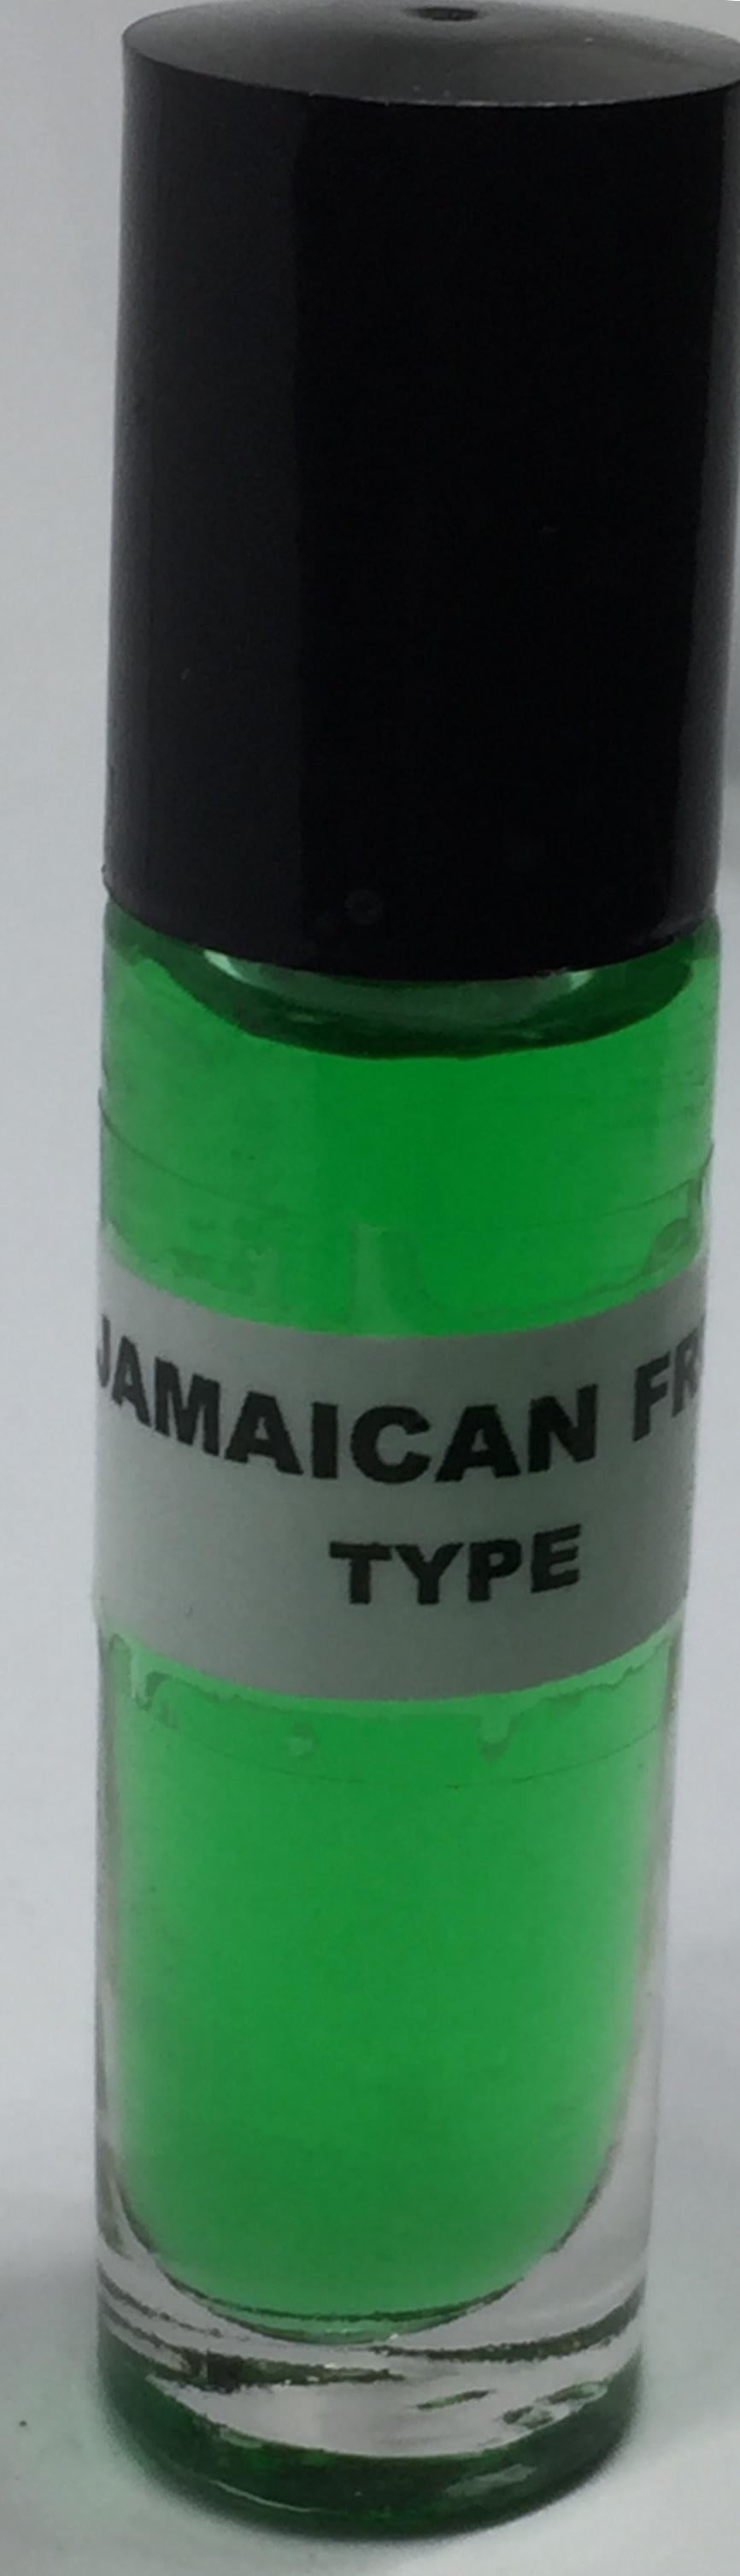 Jamaican Fruit Type(Fragrance(Perfume)Body Oil